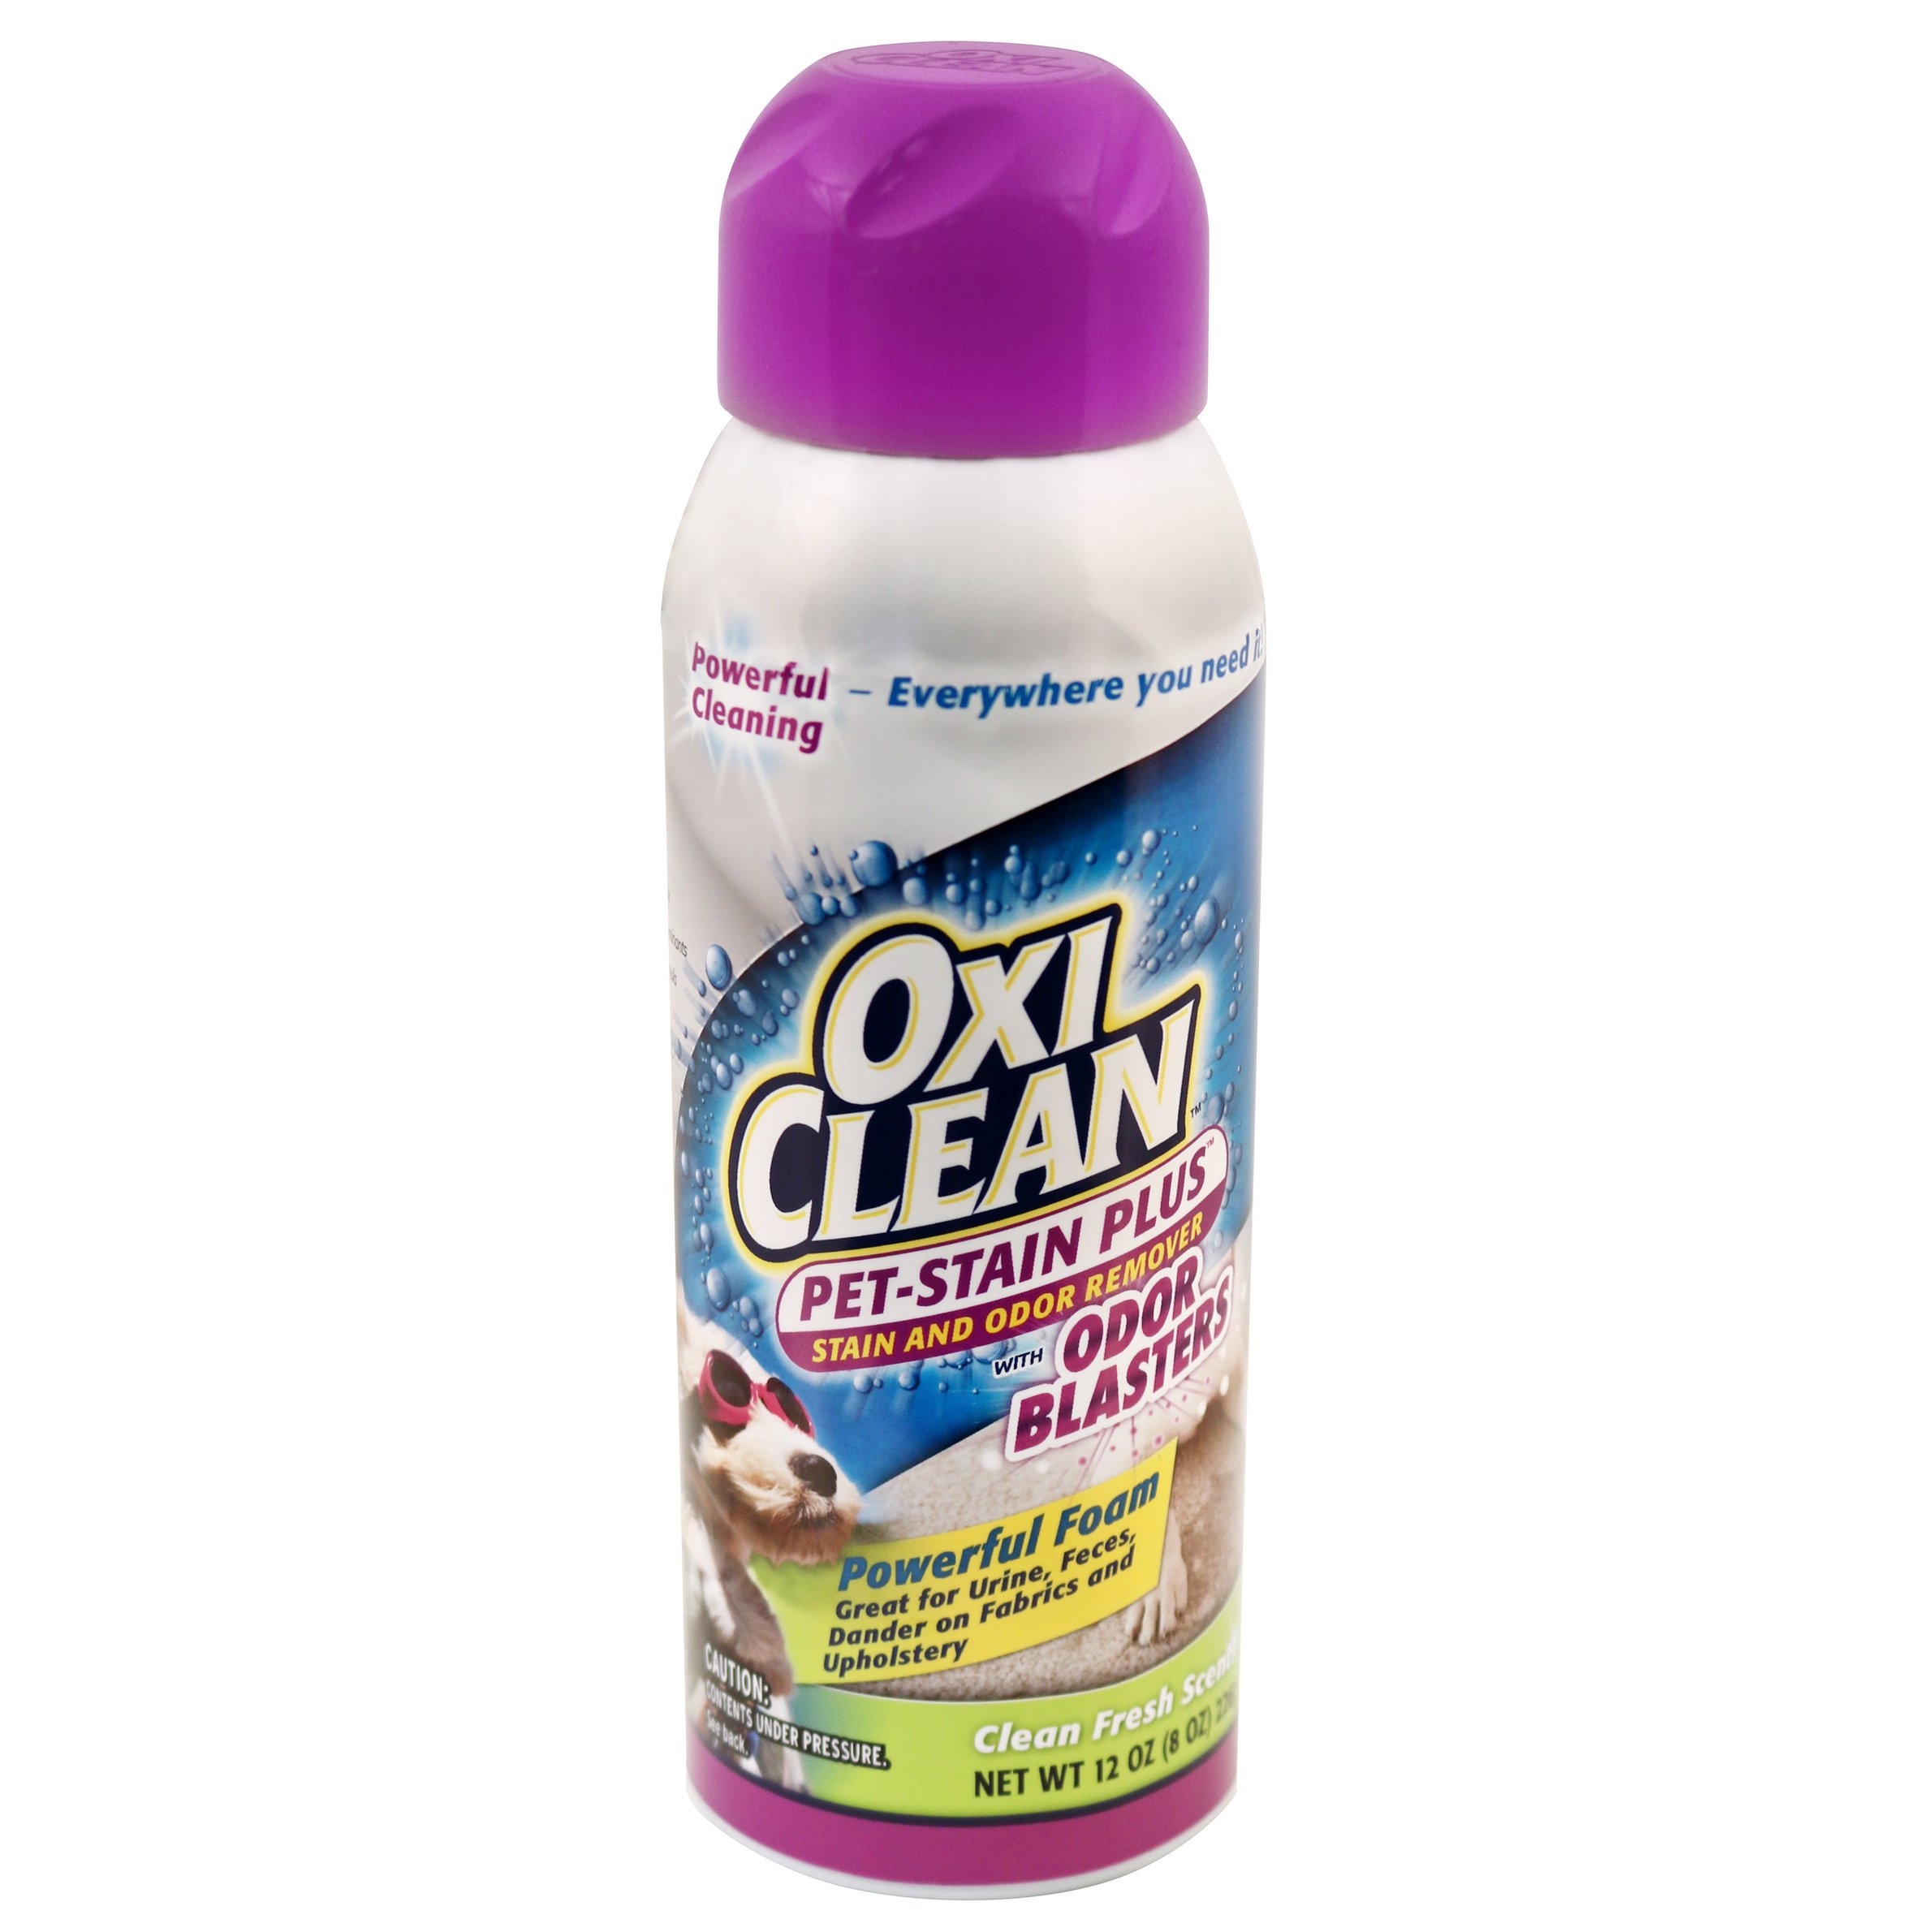 A/C Pro Vent & Duct Cleaner Odor Neutralizer (10 Ounces)